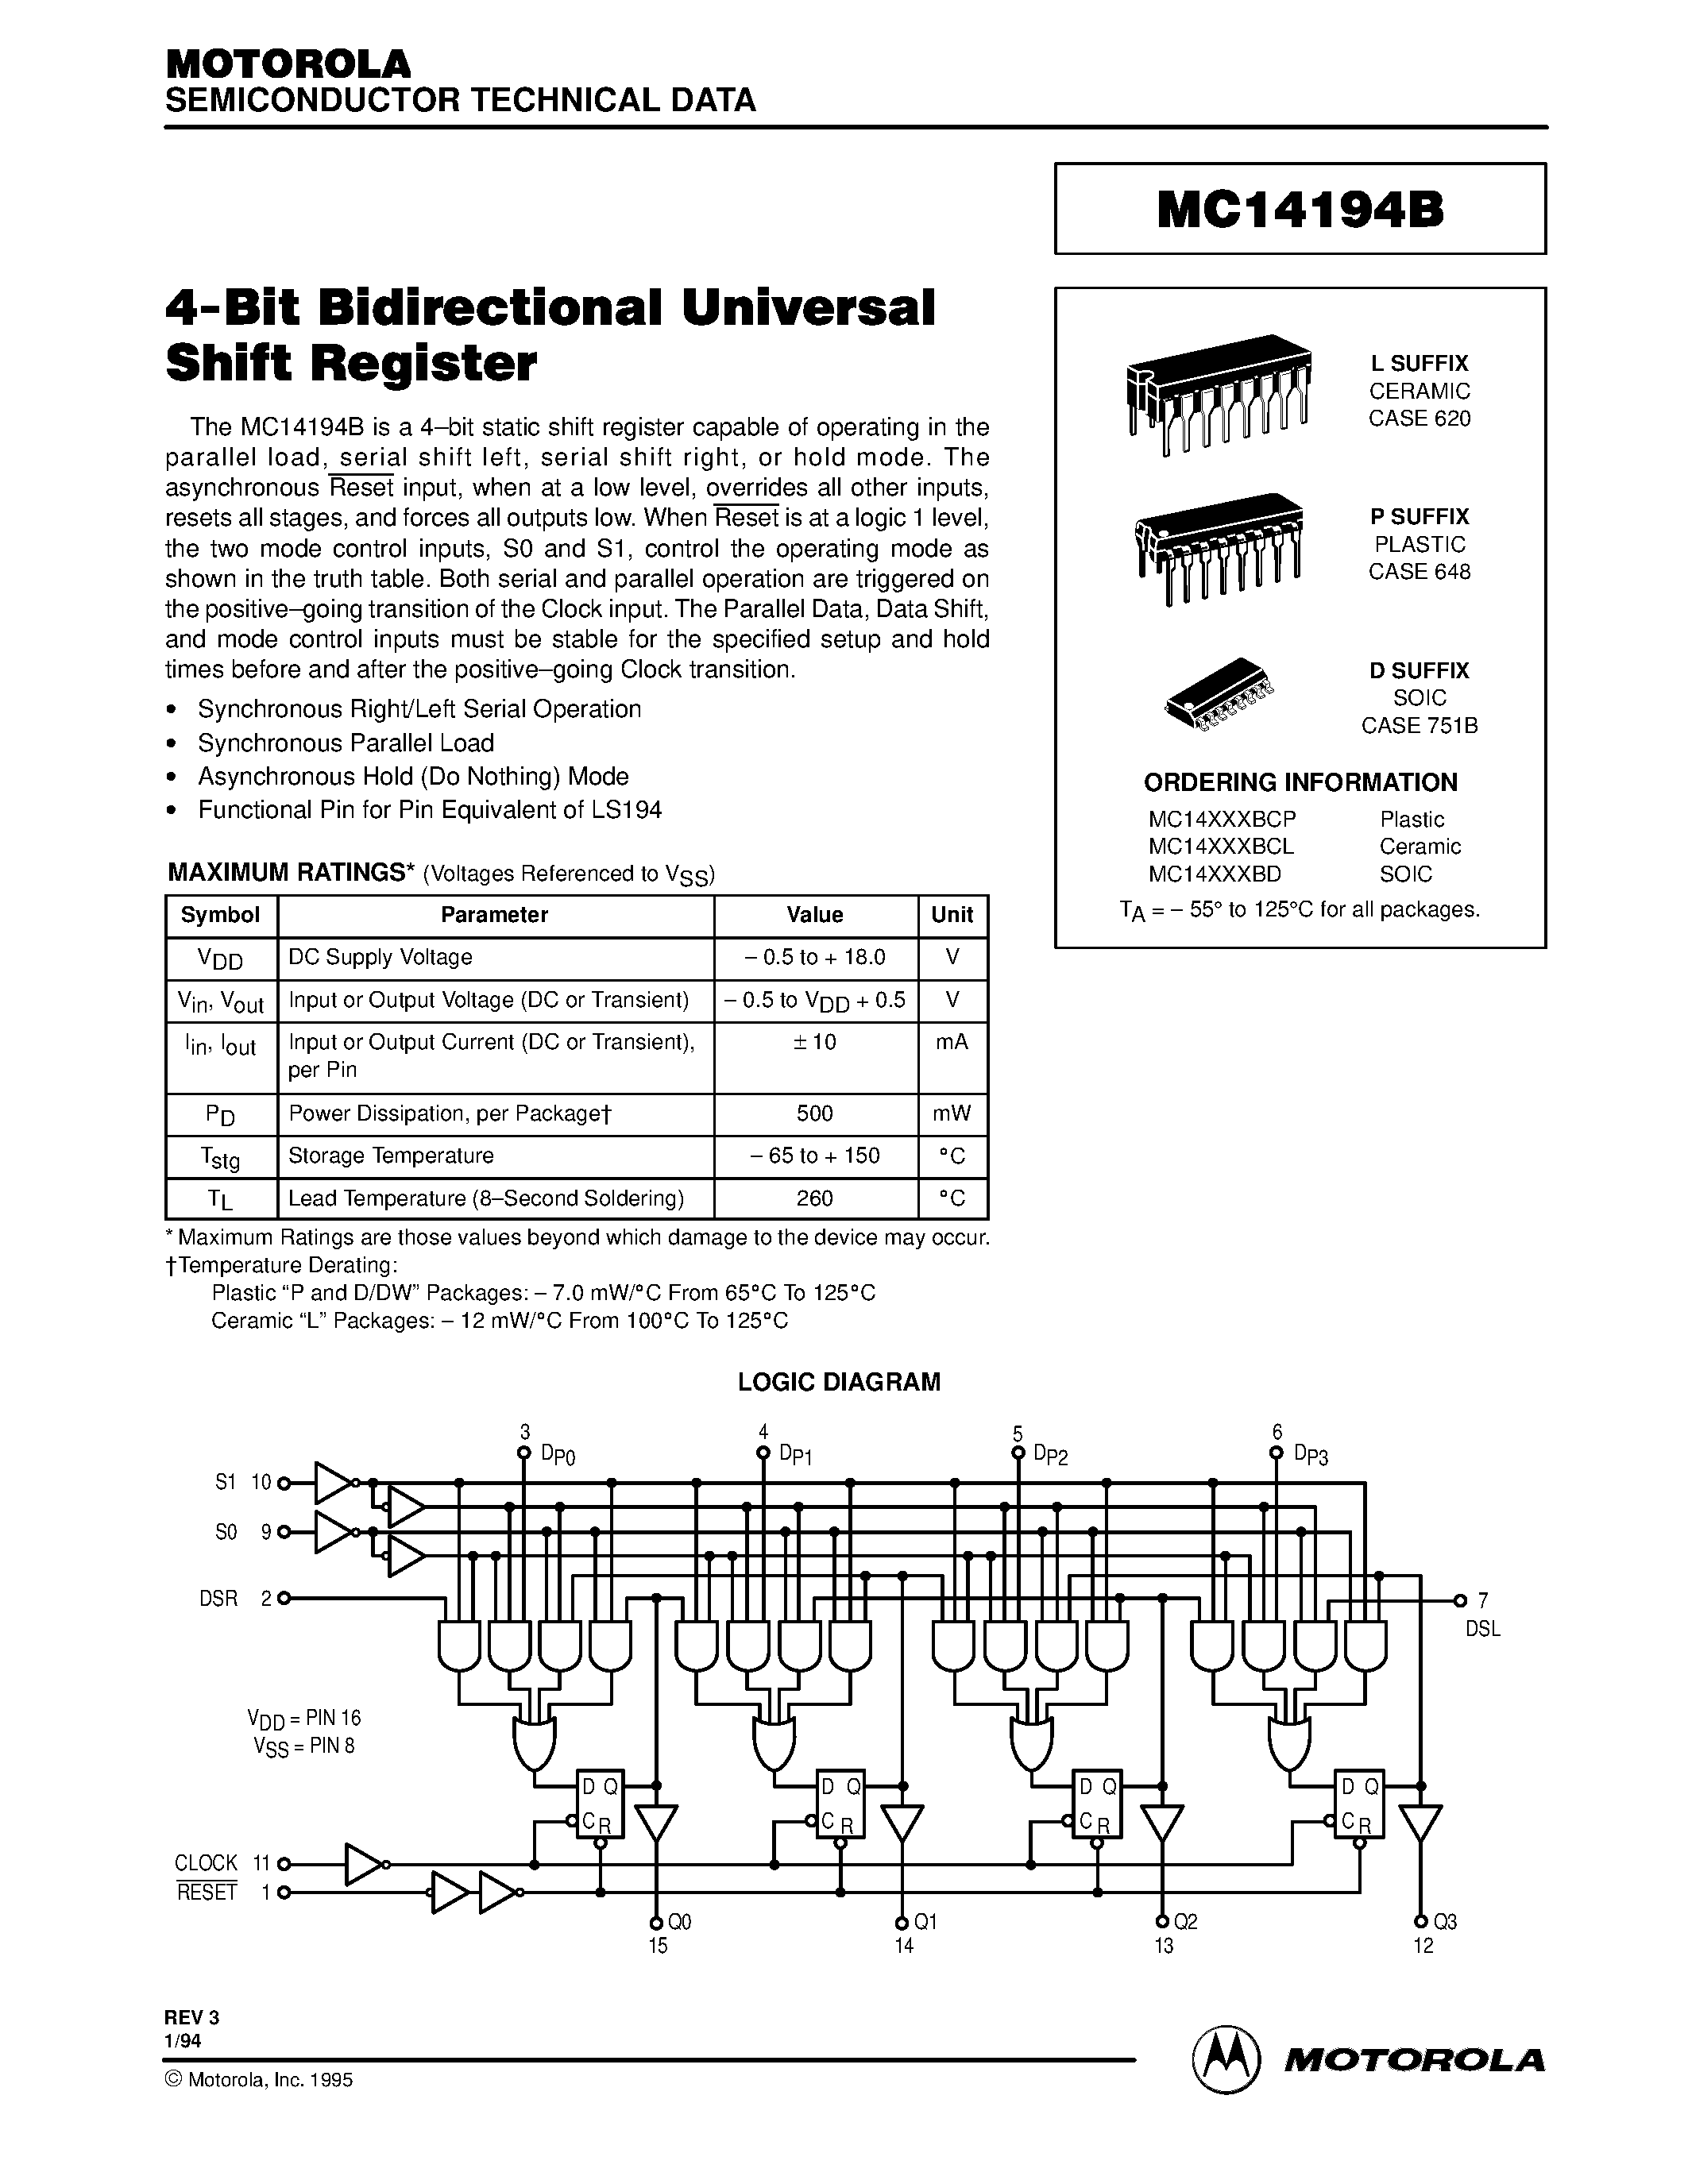 Datasheet MC14194BCP - 4-Bit Bidirectional Universal Shift Register page 1